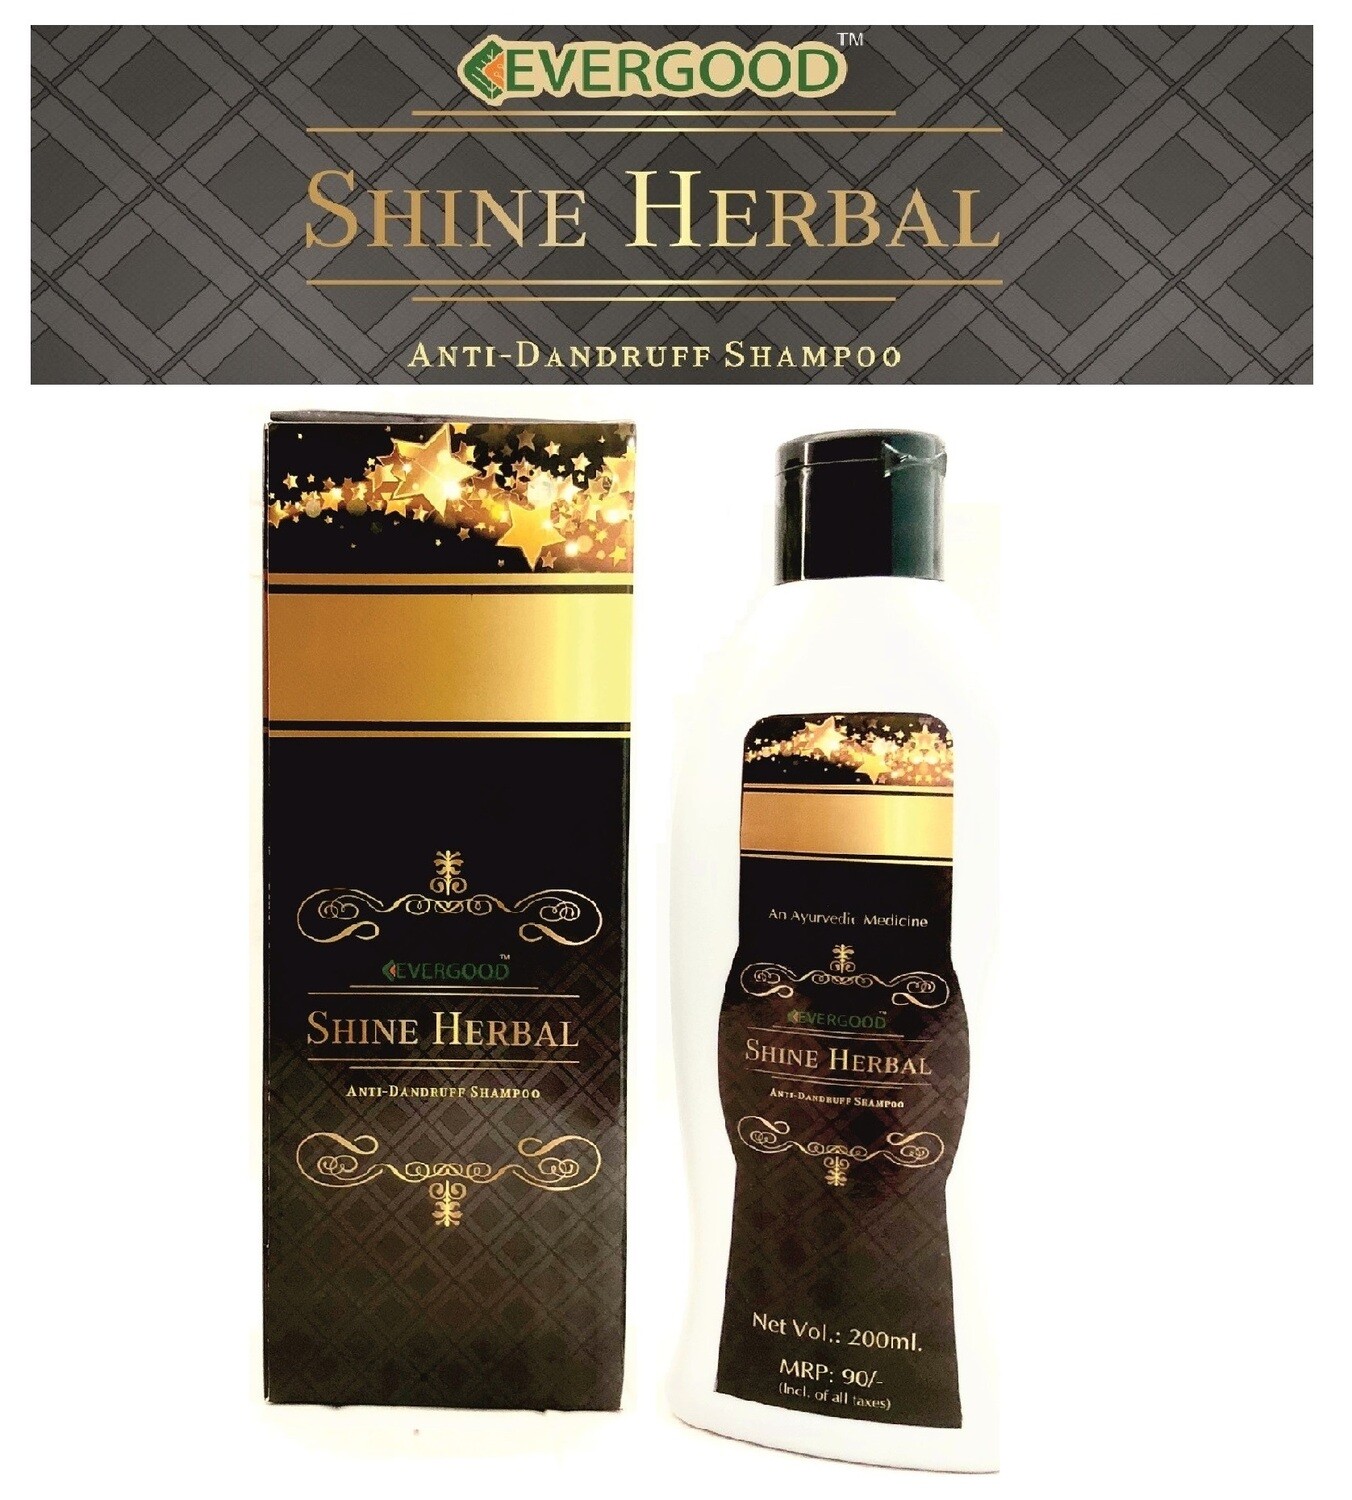 Evergood Shine Herbal Anti-Dandruff Shampoo 200ml